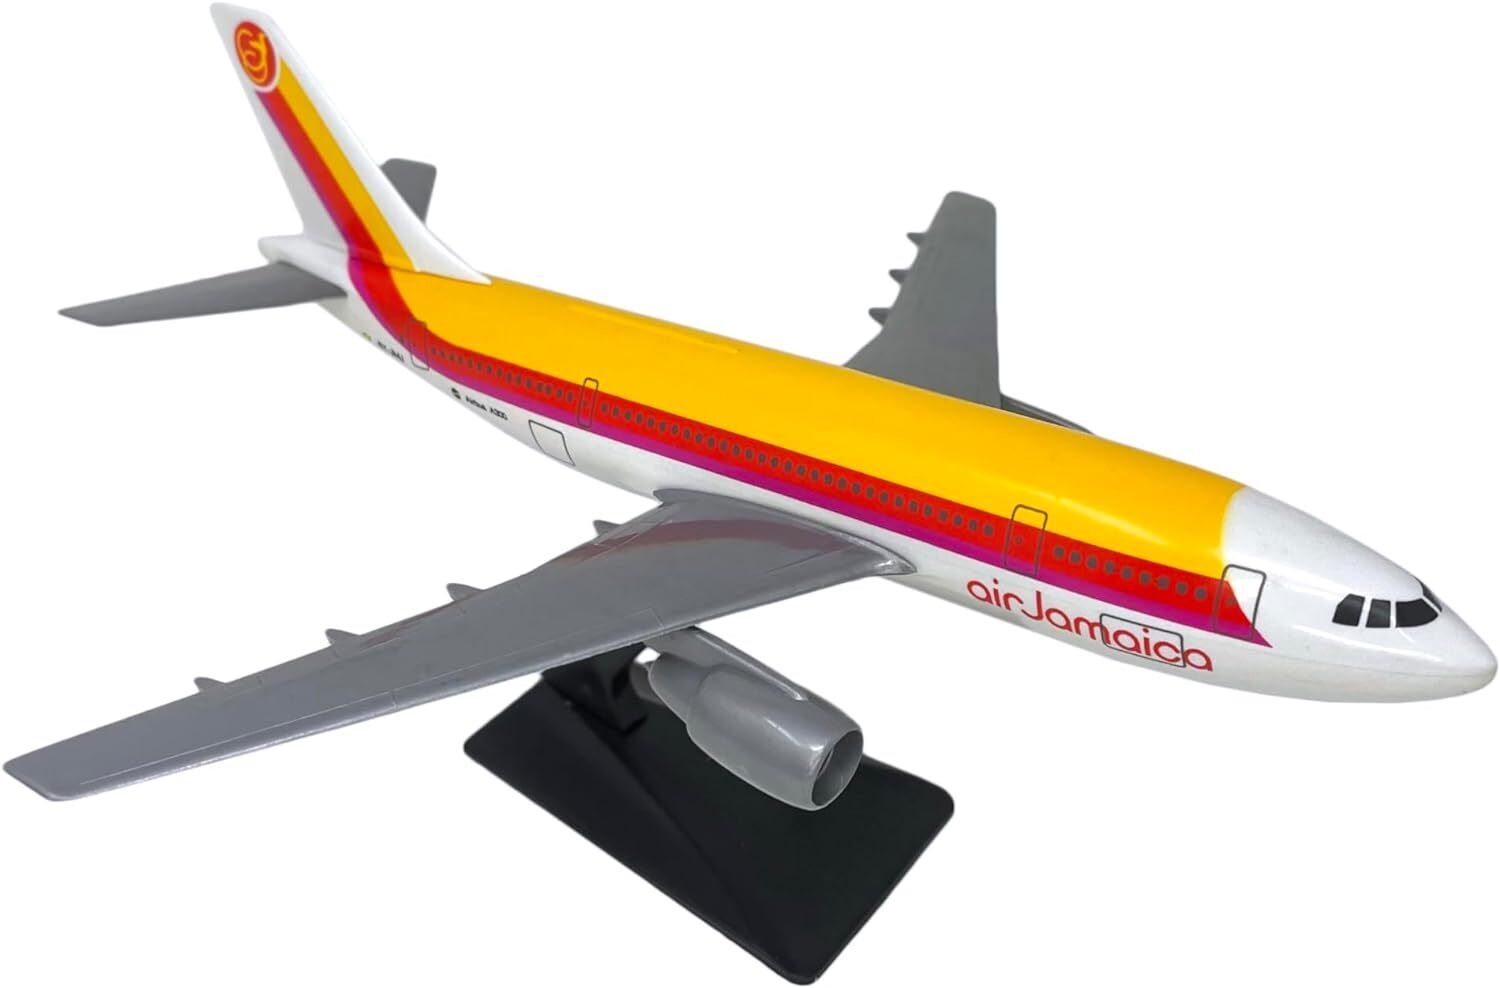 Flight Miniatures Air Jamaica Airbus A300 Desk Top Display 1/200 Model Airplane